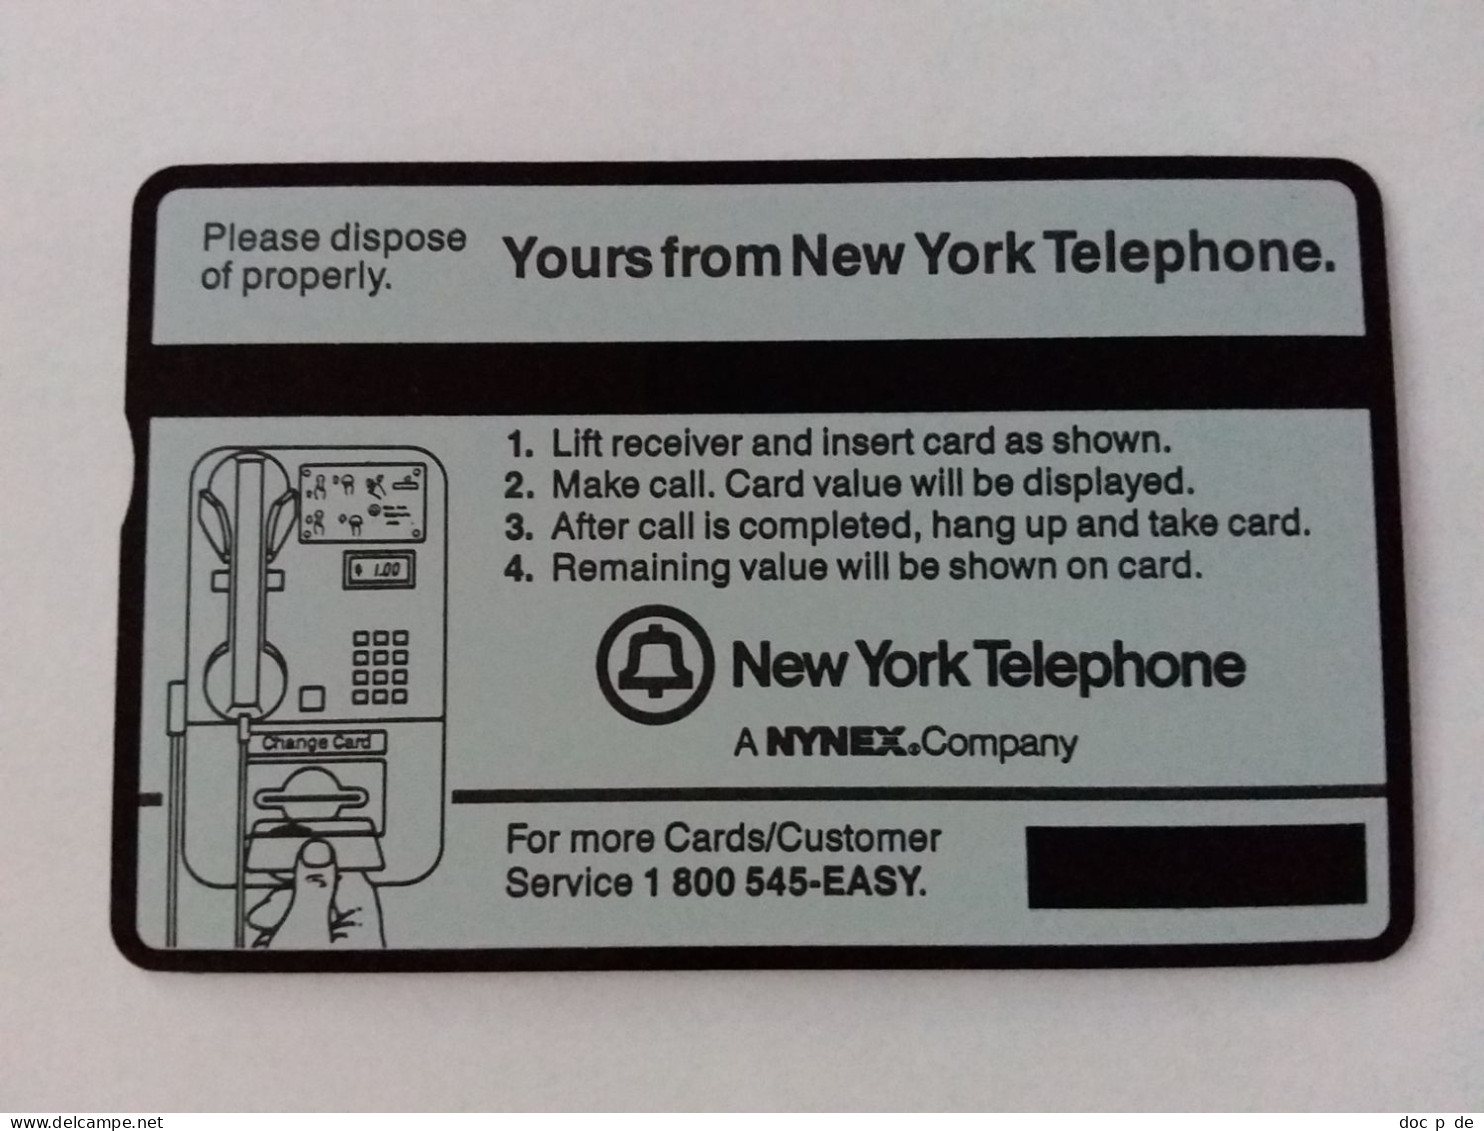 USA - New York - NYC By Night - USA-NL-05 - Change Card - Skyline By Night - 210B - Mint !!! - Schede Olografiche (Landis & Gyr)